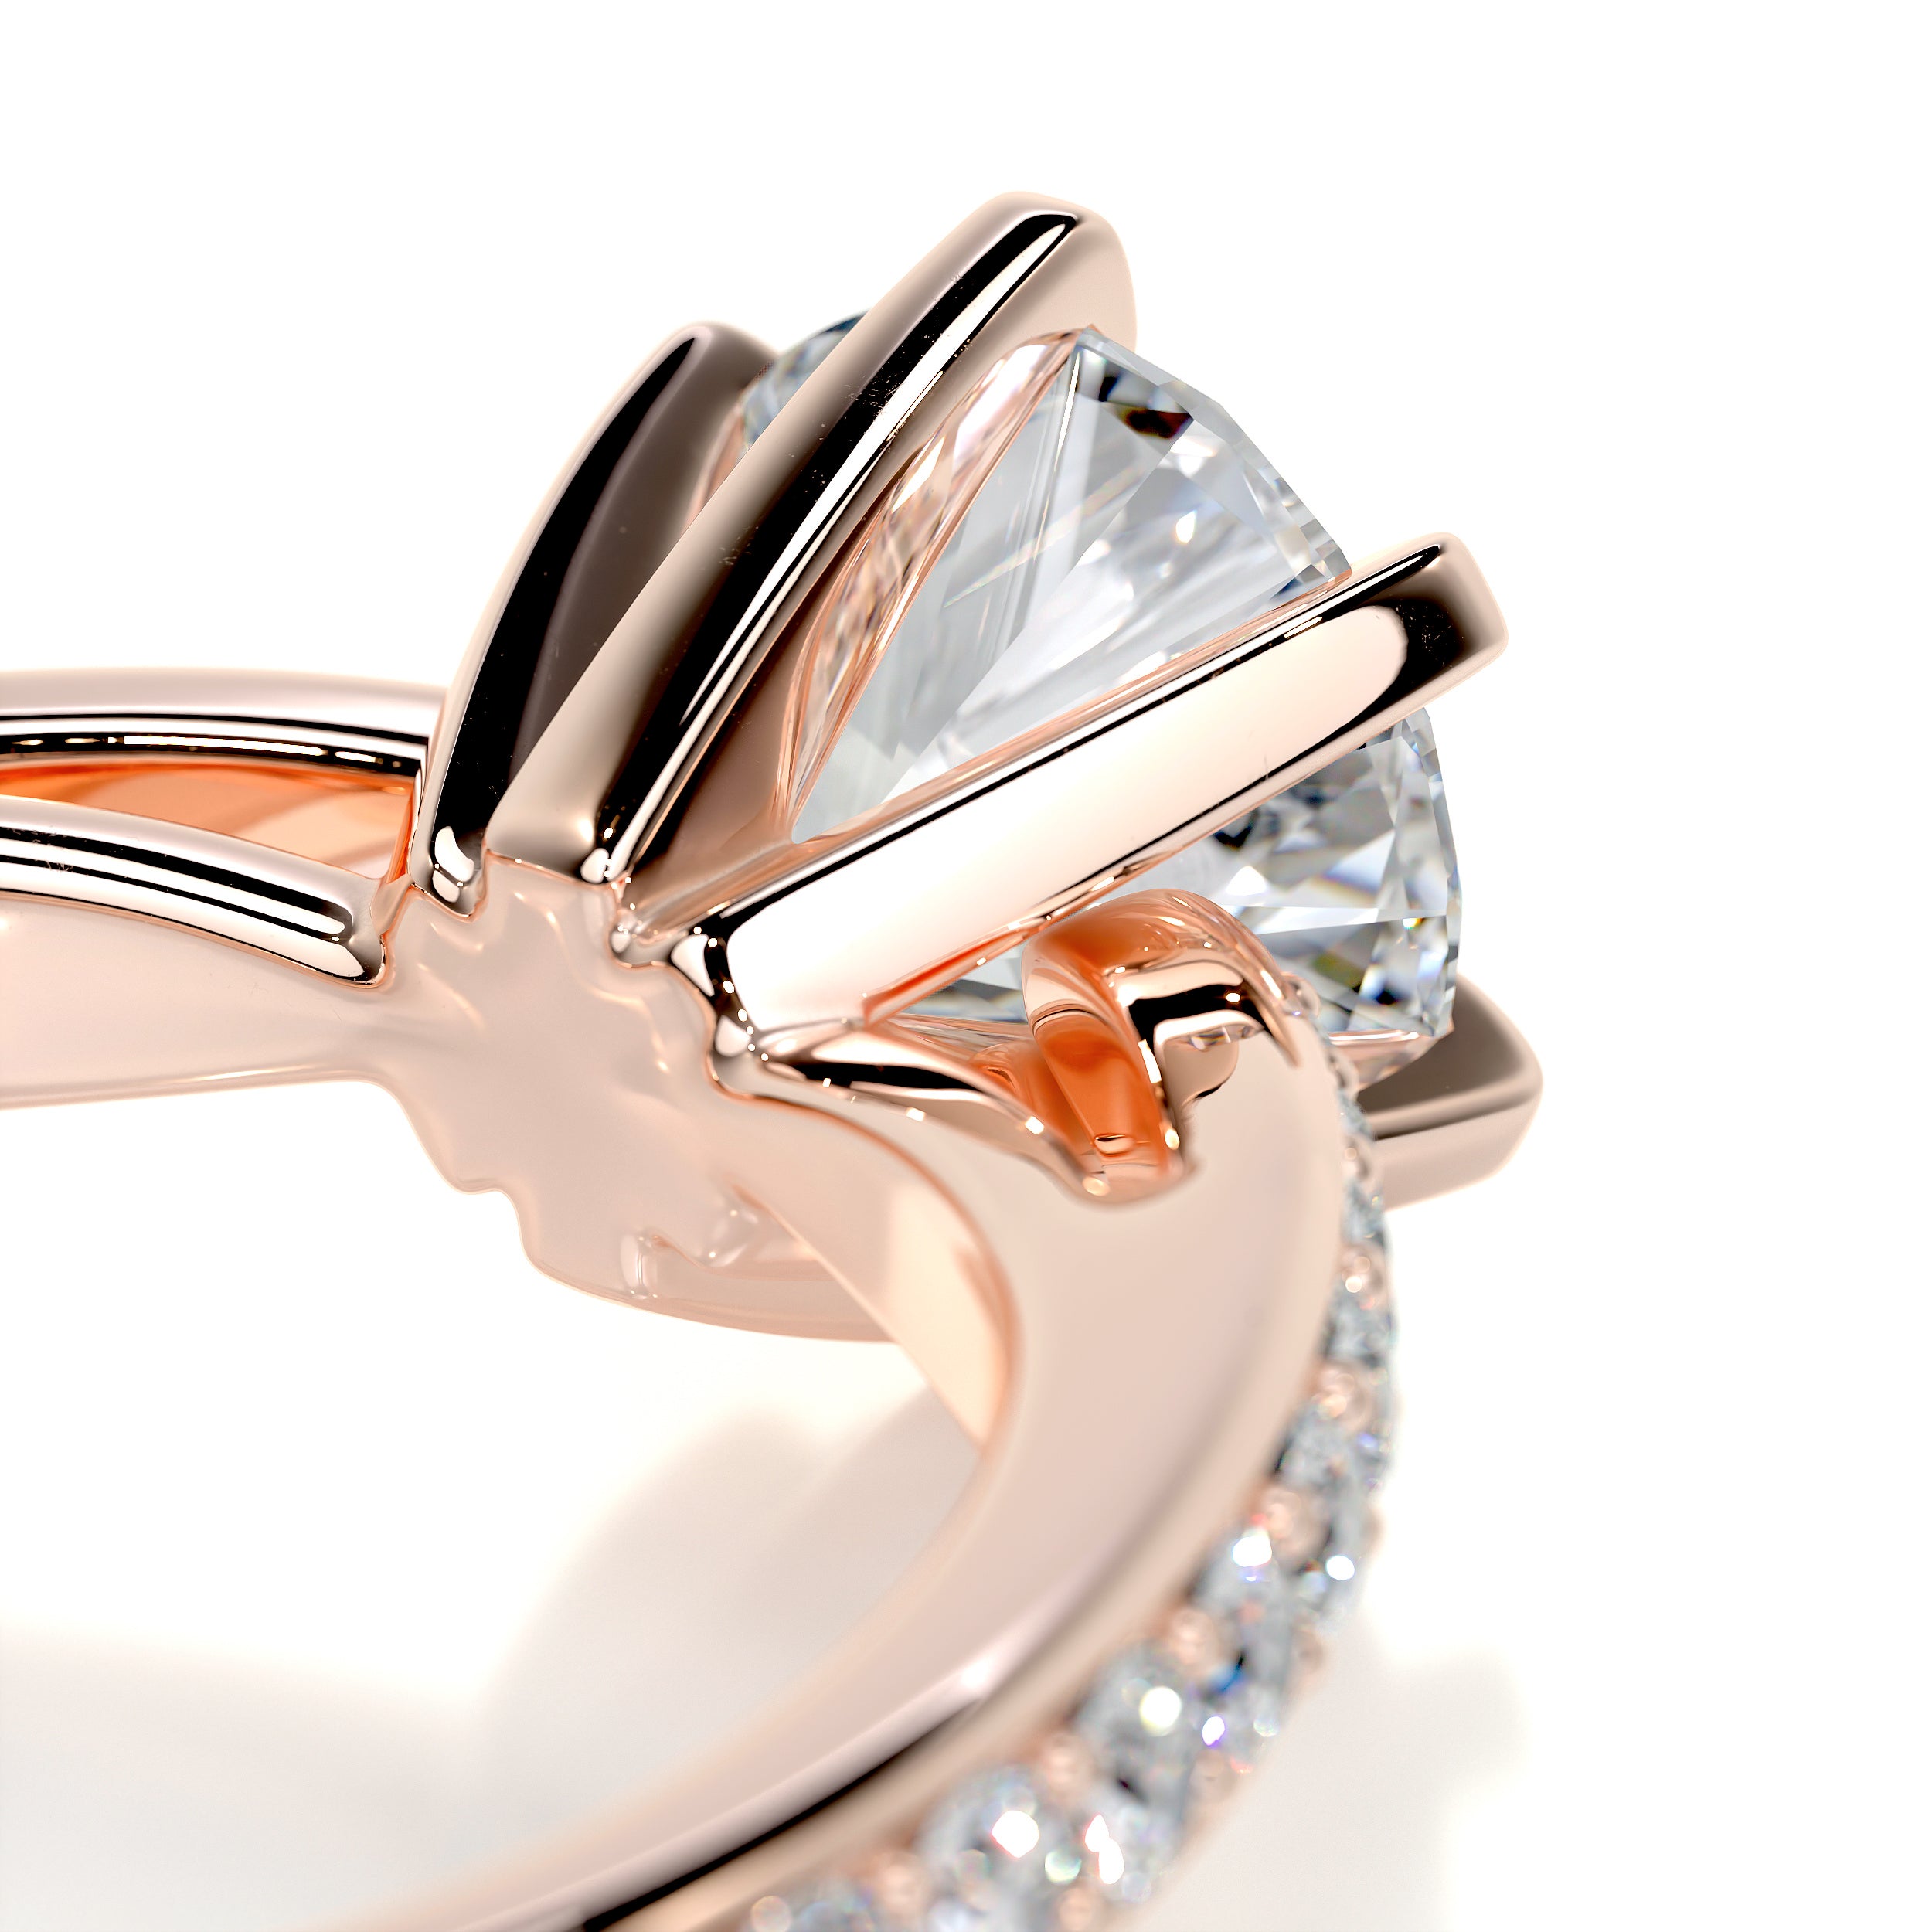 Talia Diamond Engagement Ring - 14K Rose Gold